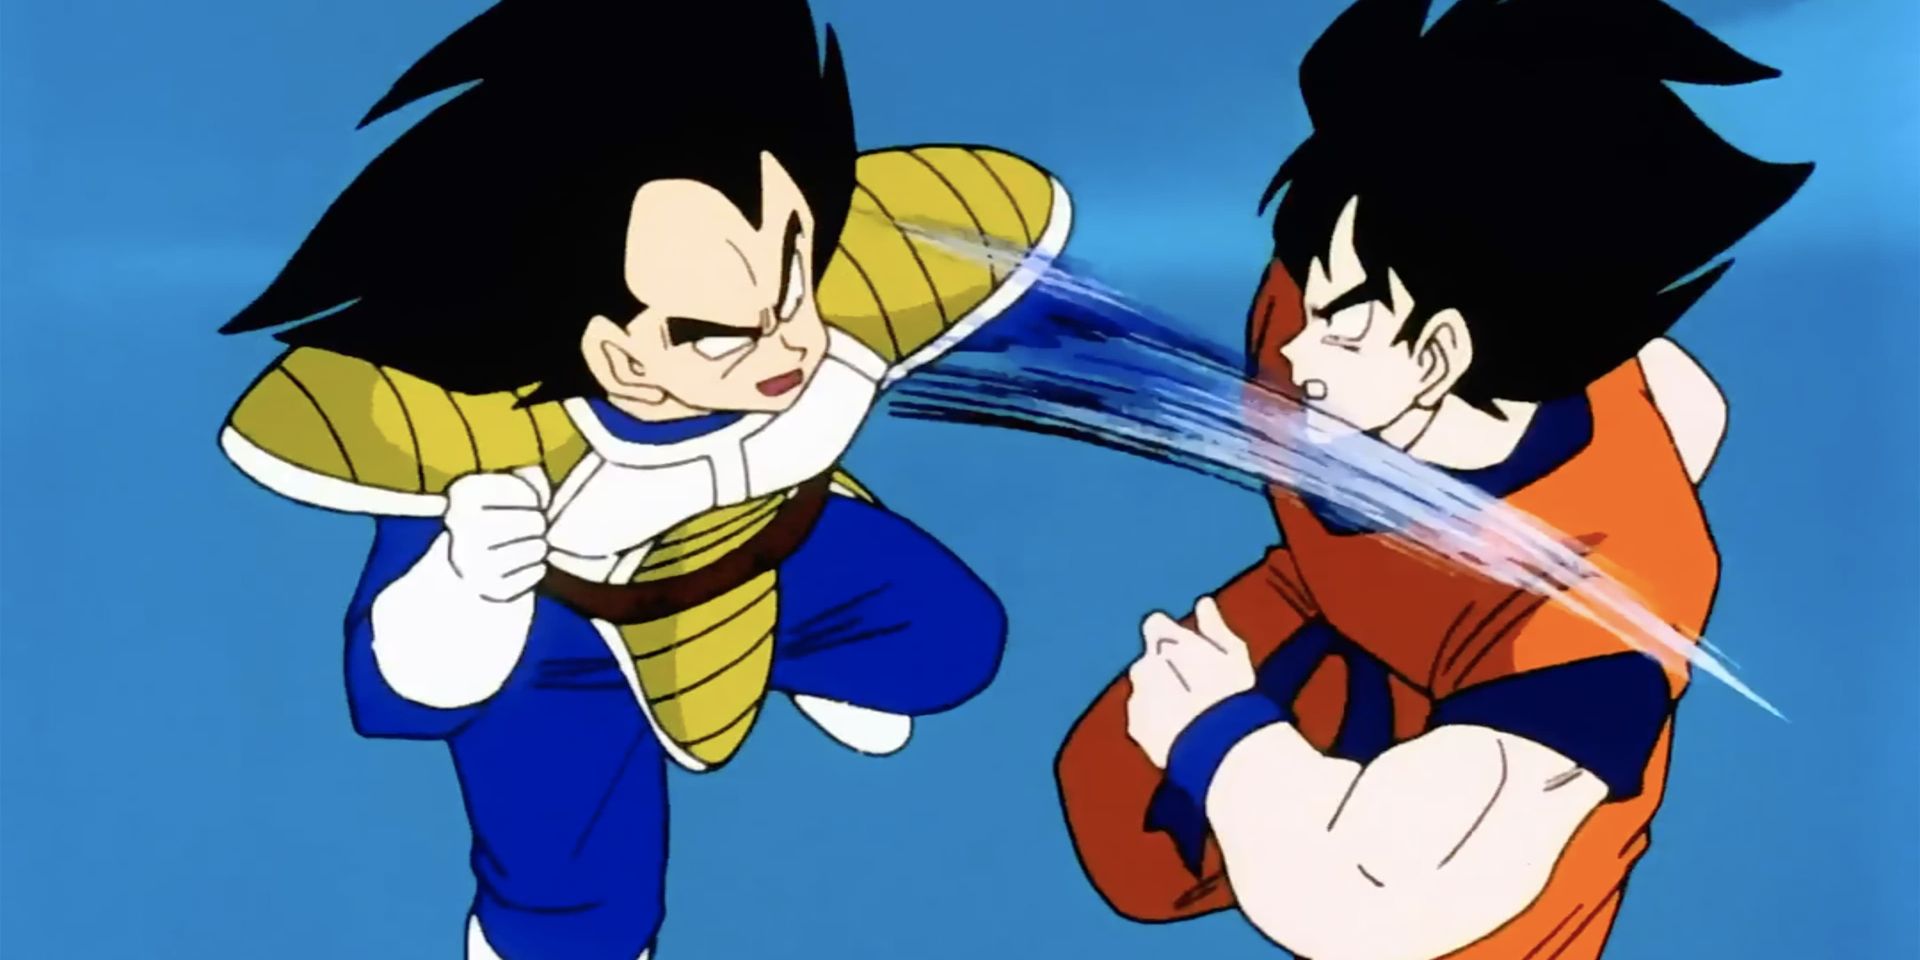 Goku dodges Vegeta's punches in their Saiyan Saga battle in Dragon Ball Z.